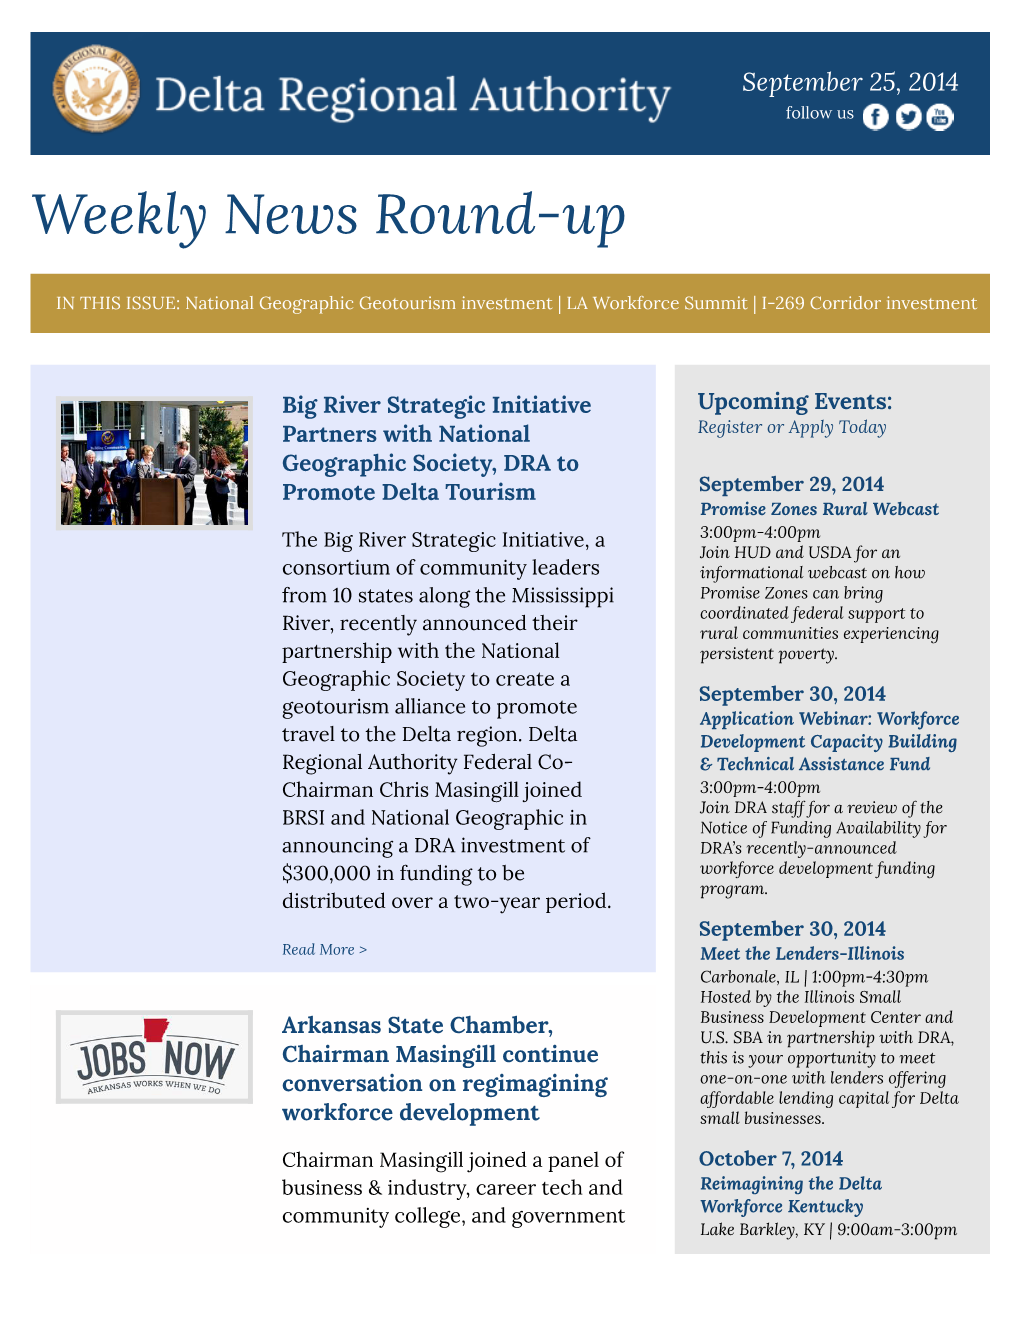 Weekly News Round-Up